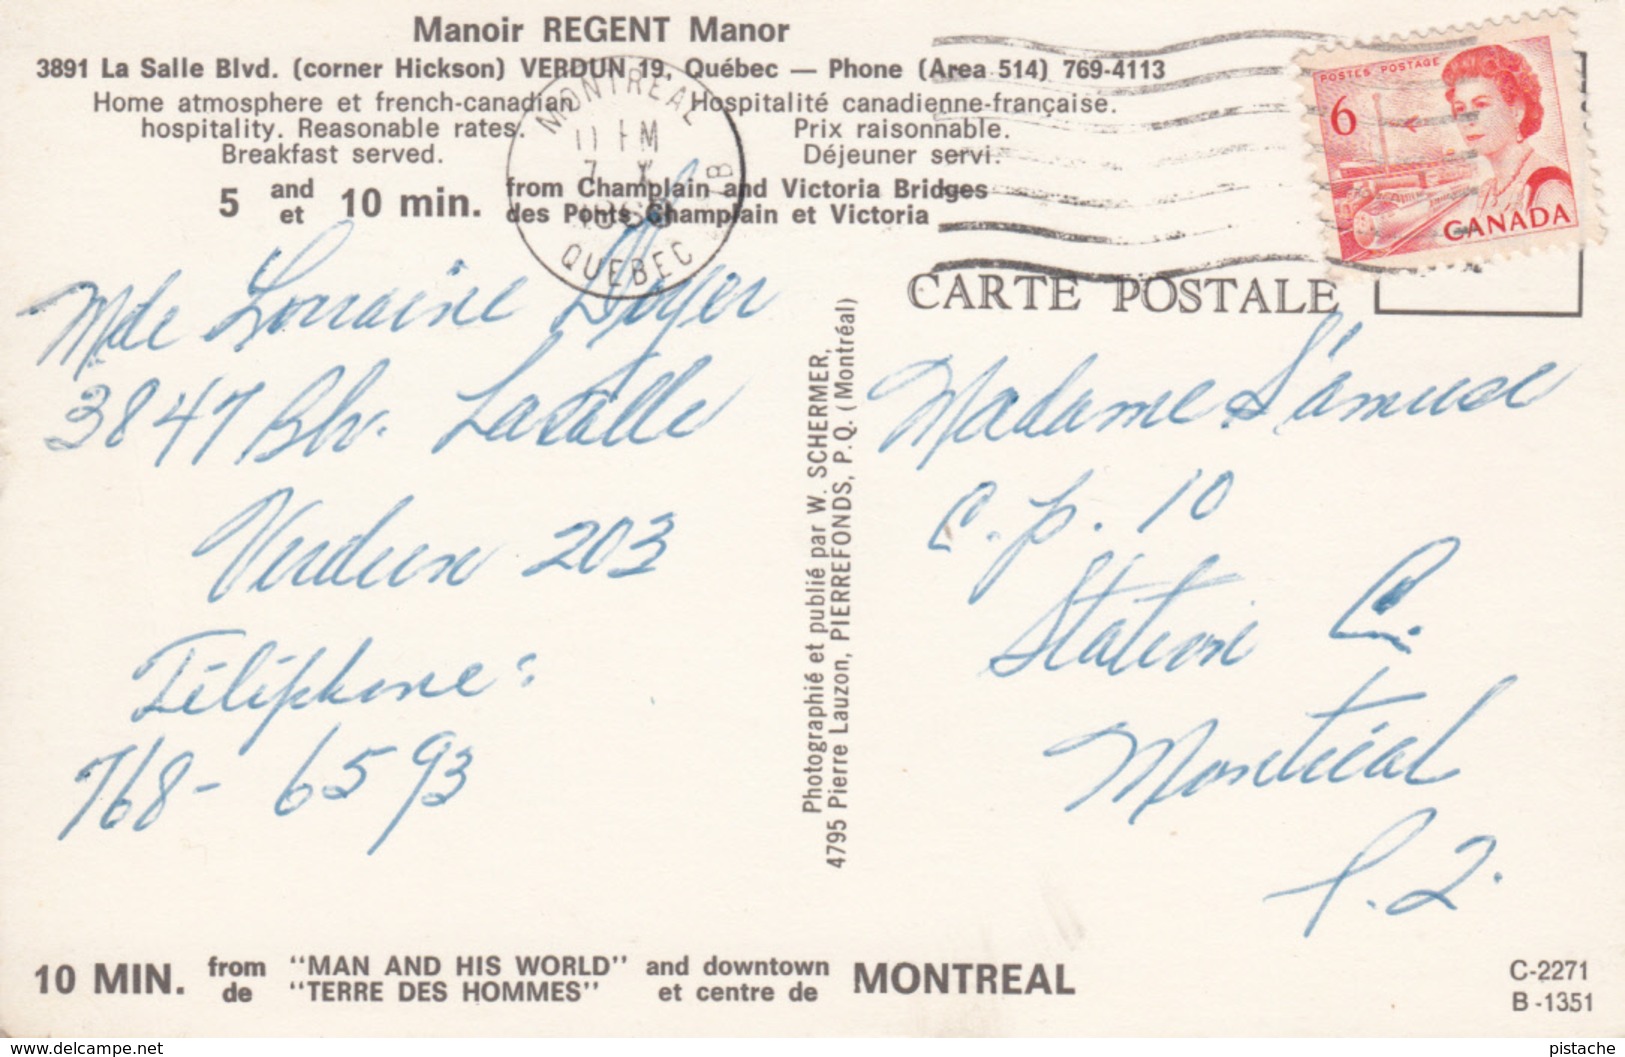 Verdun Montréal Québec Canada - Hotel Manoir Regent Manor - 1960-1965 Car - Stamp Postmark - 2 Scans - Montreal